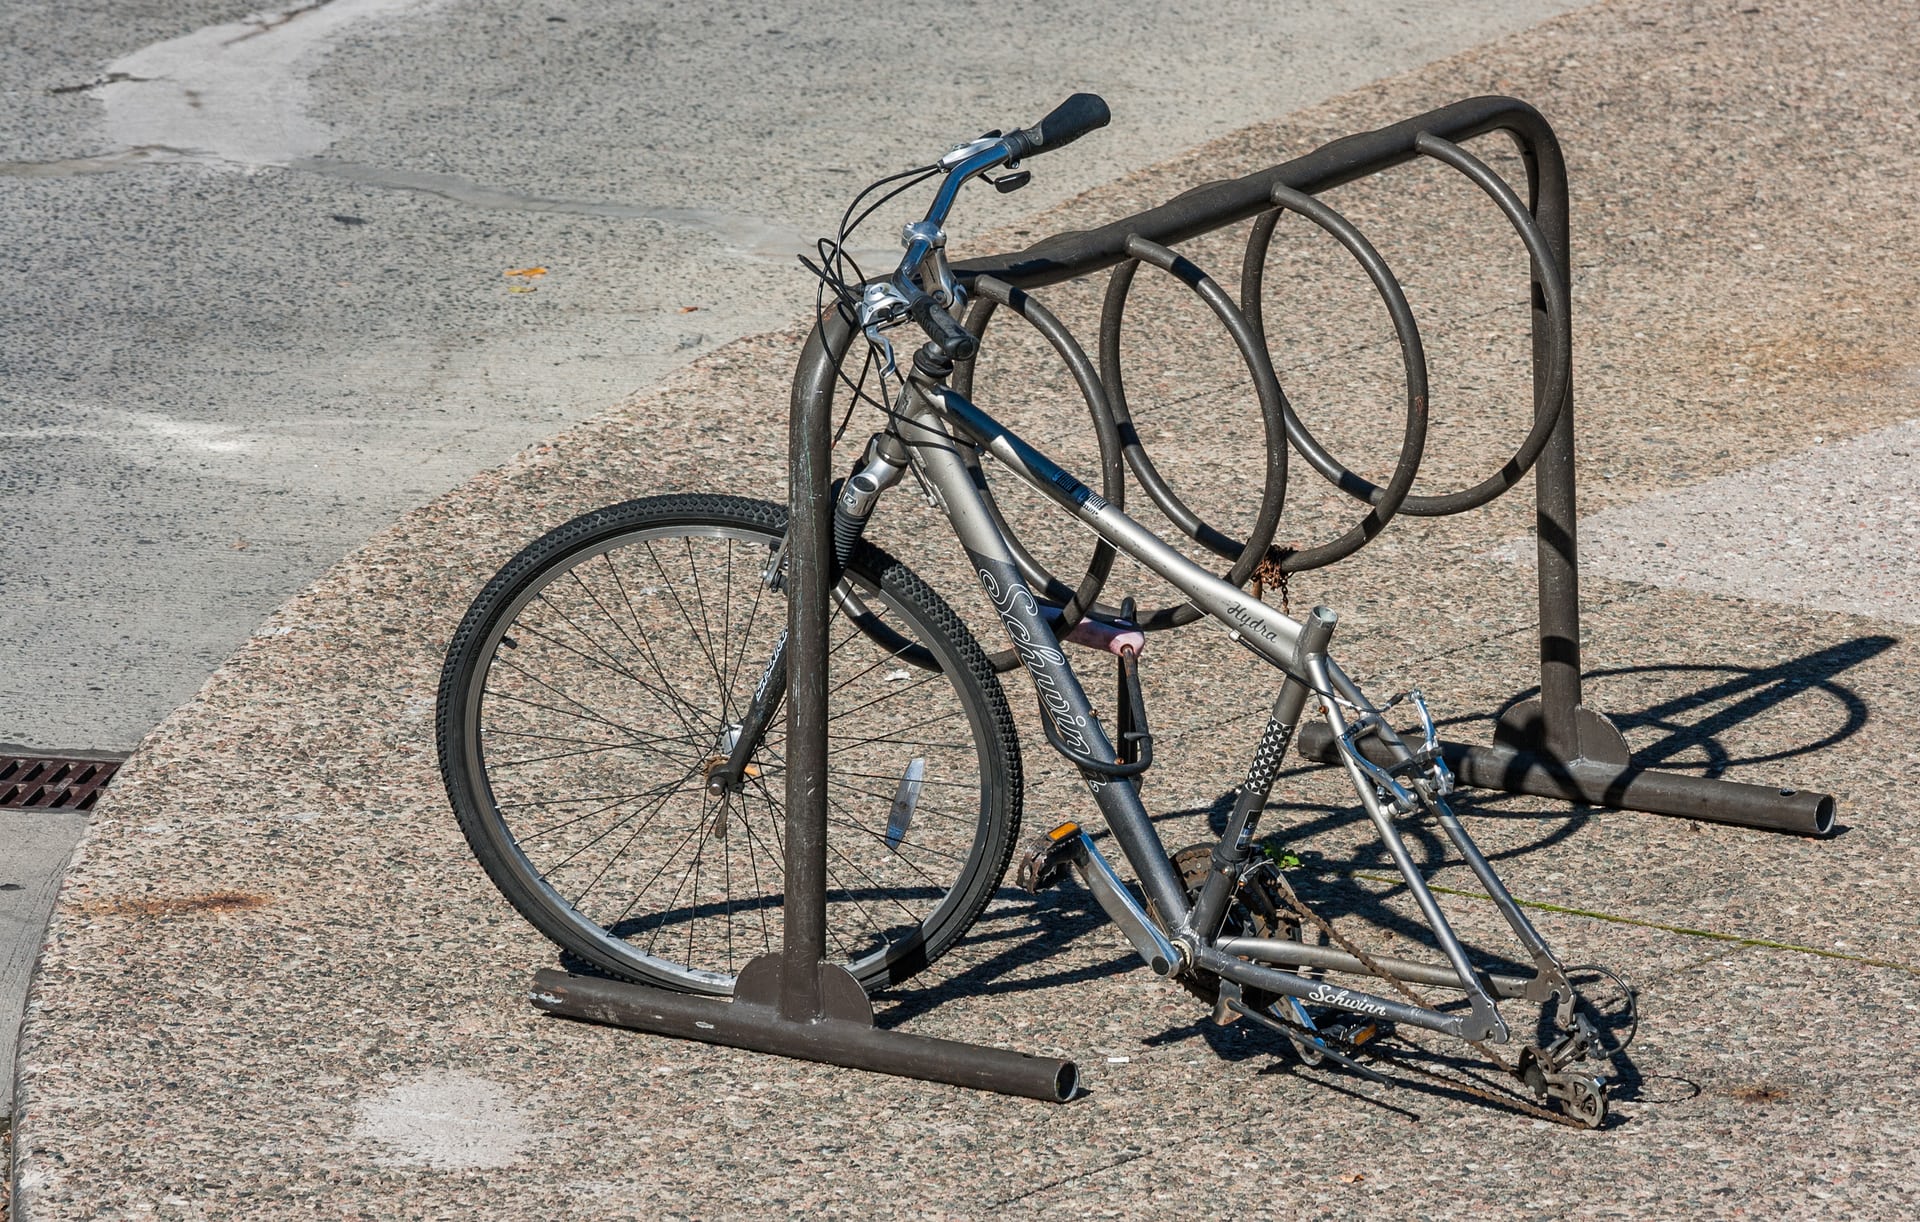 app κατά της κλοπής ποδηλάτων στο Βανκούβερ - 4